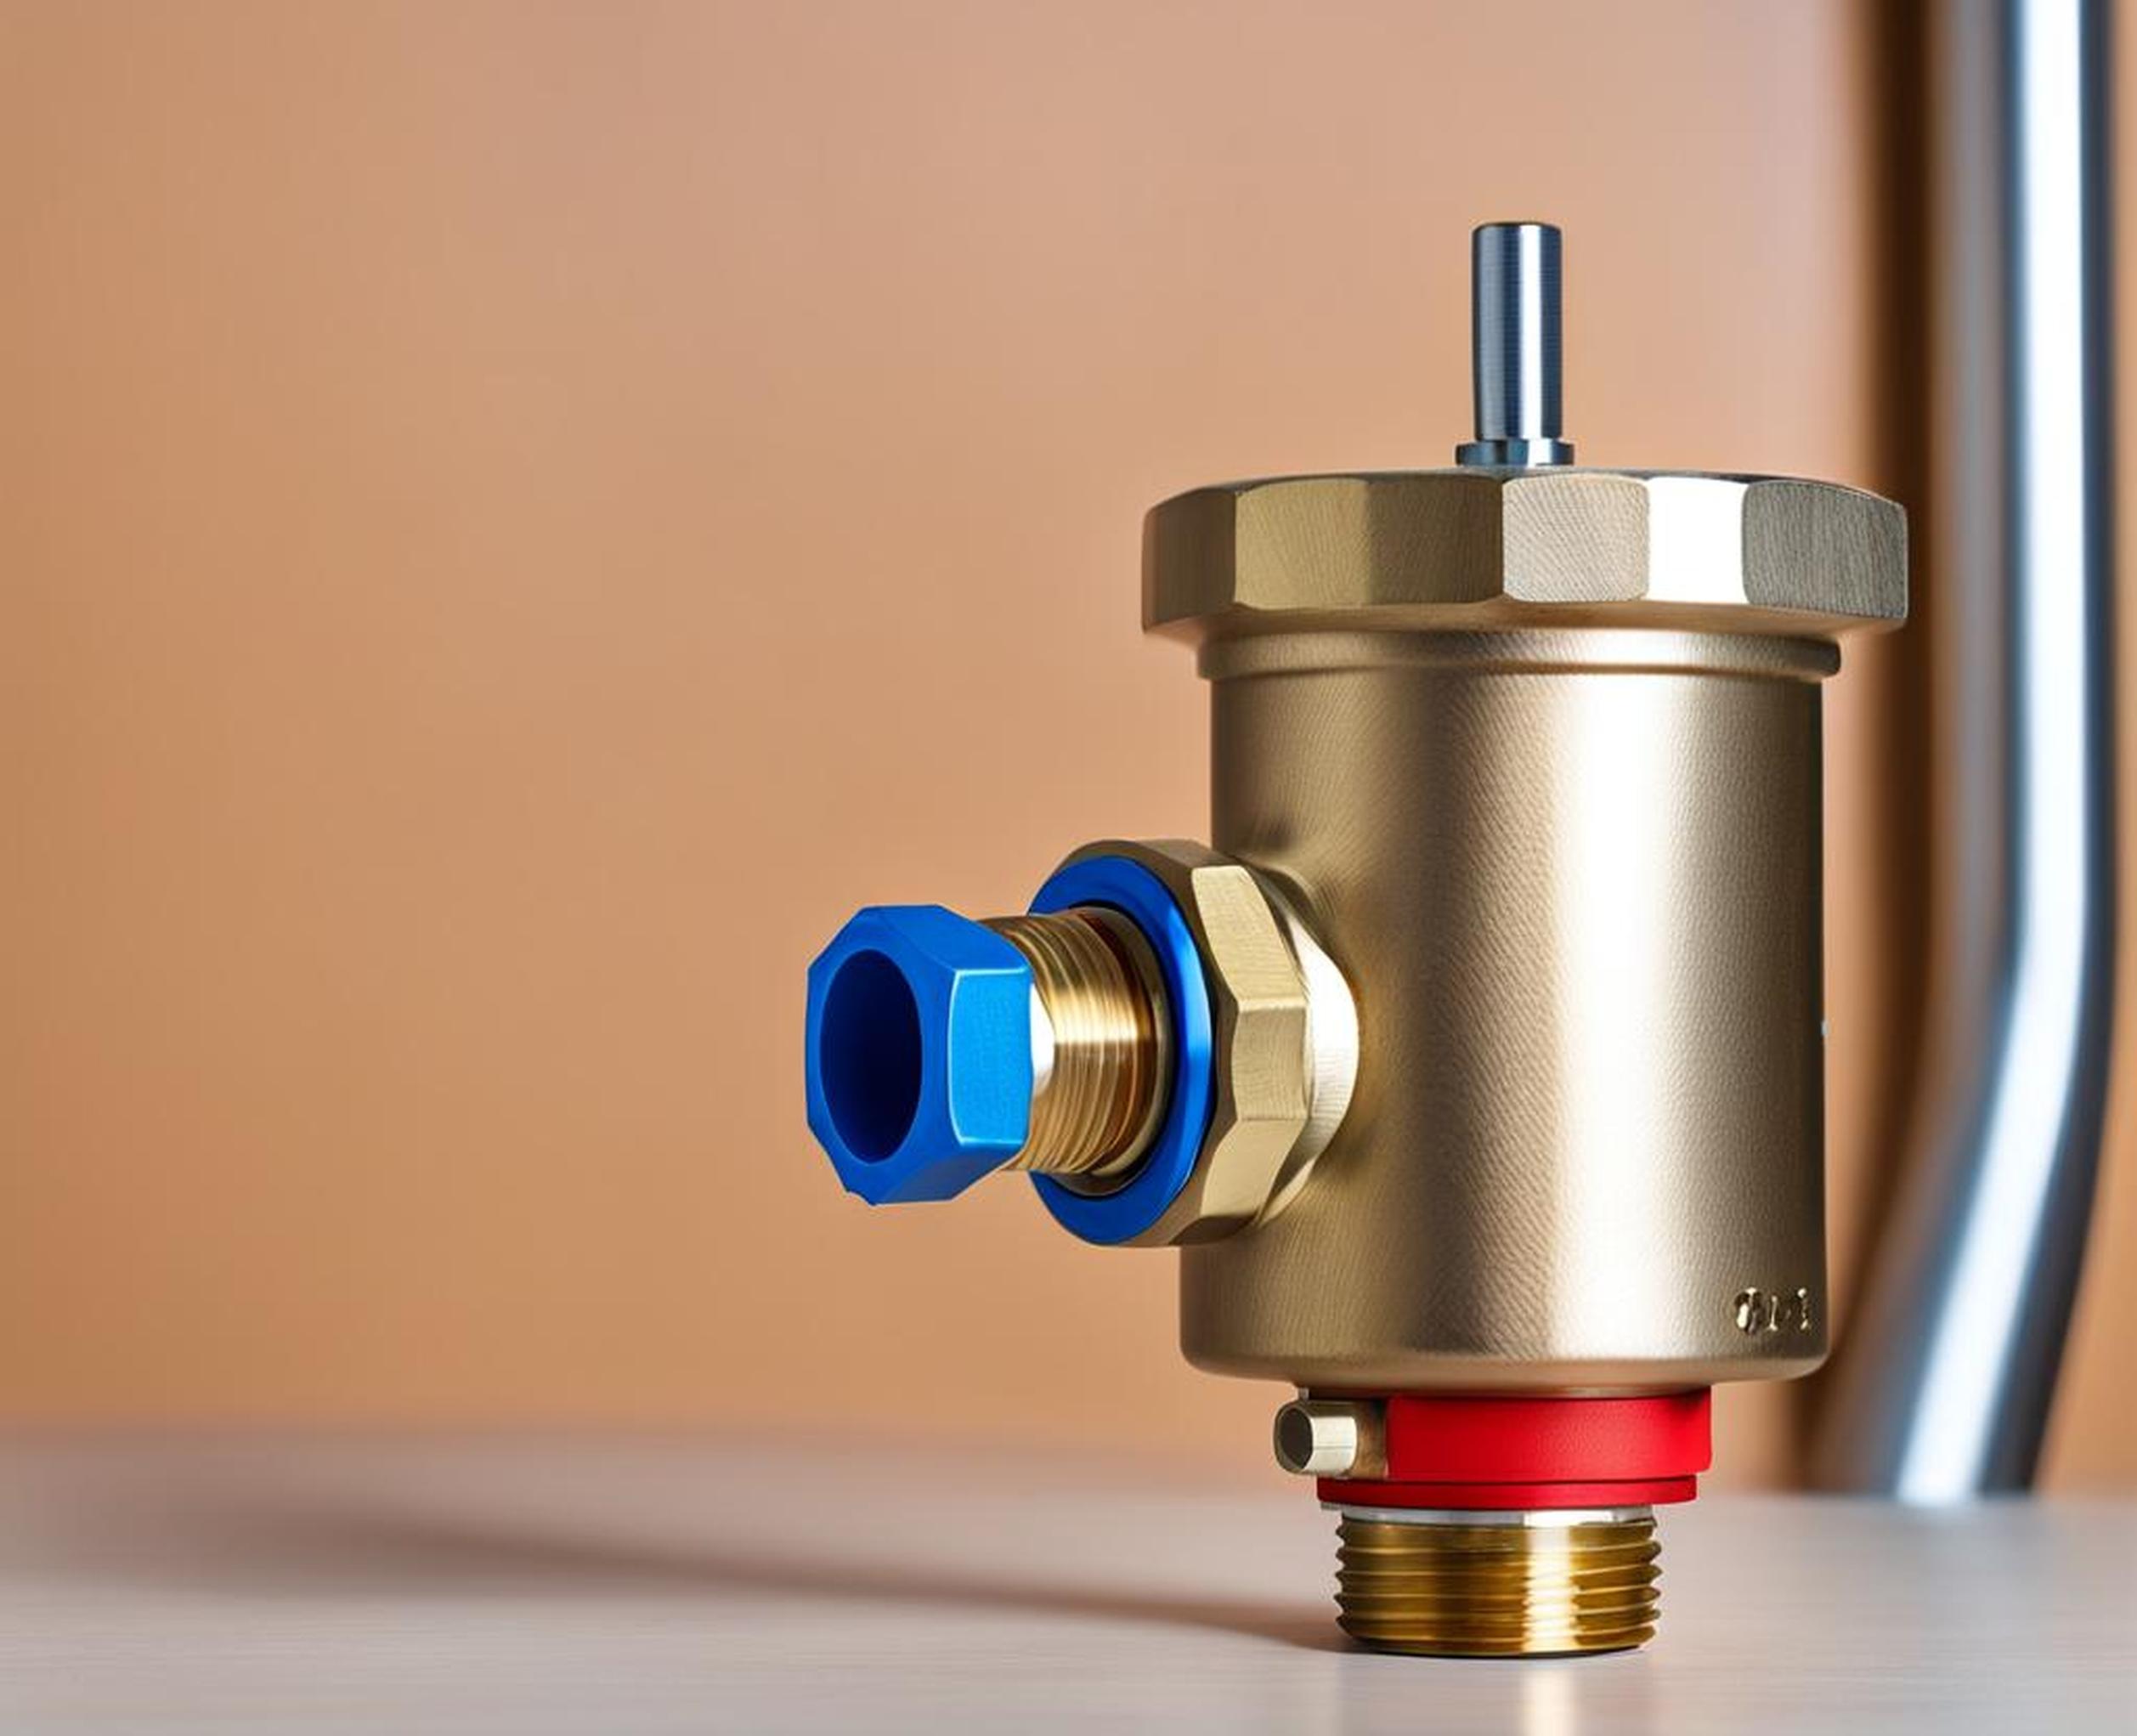 hot water heater pressure relief valve keeps opening